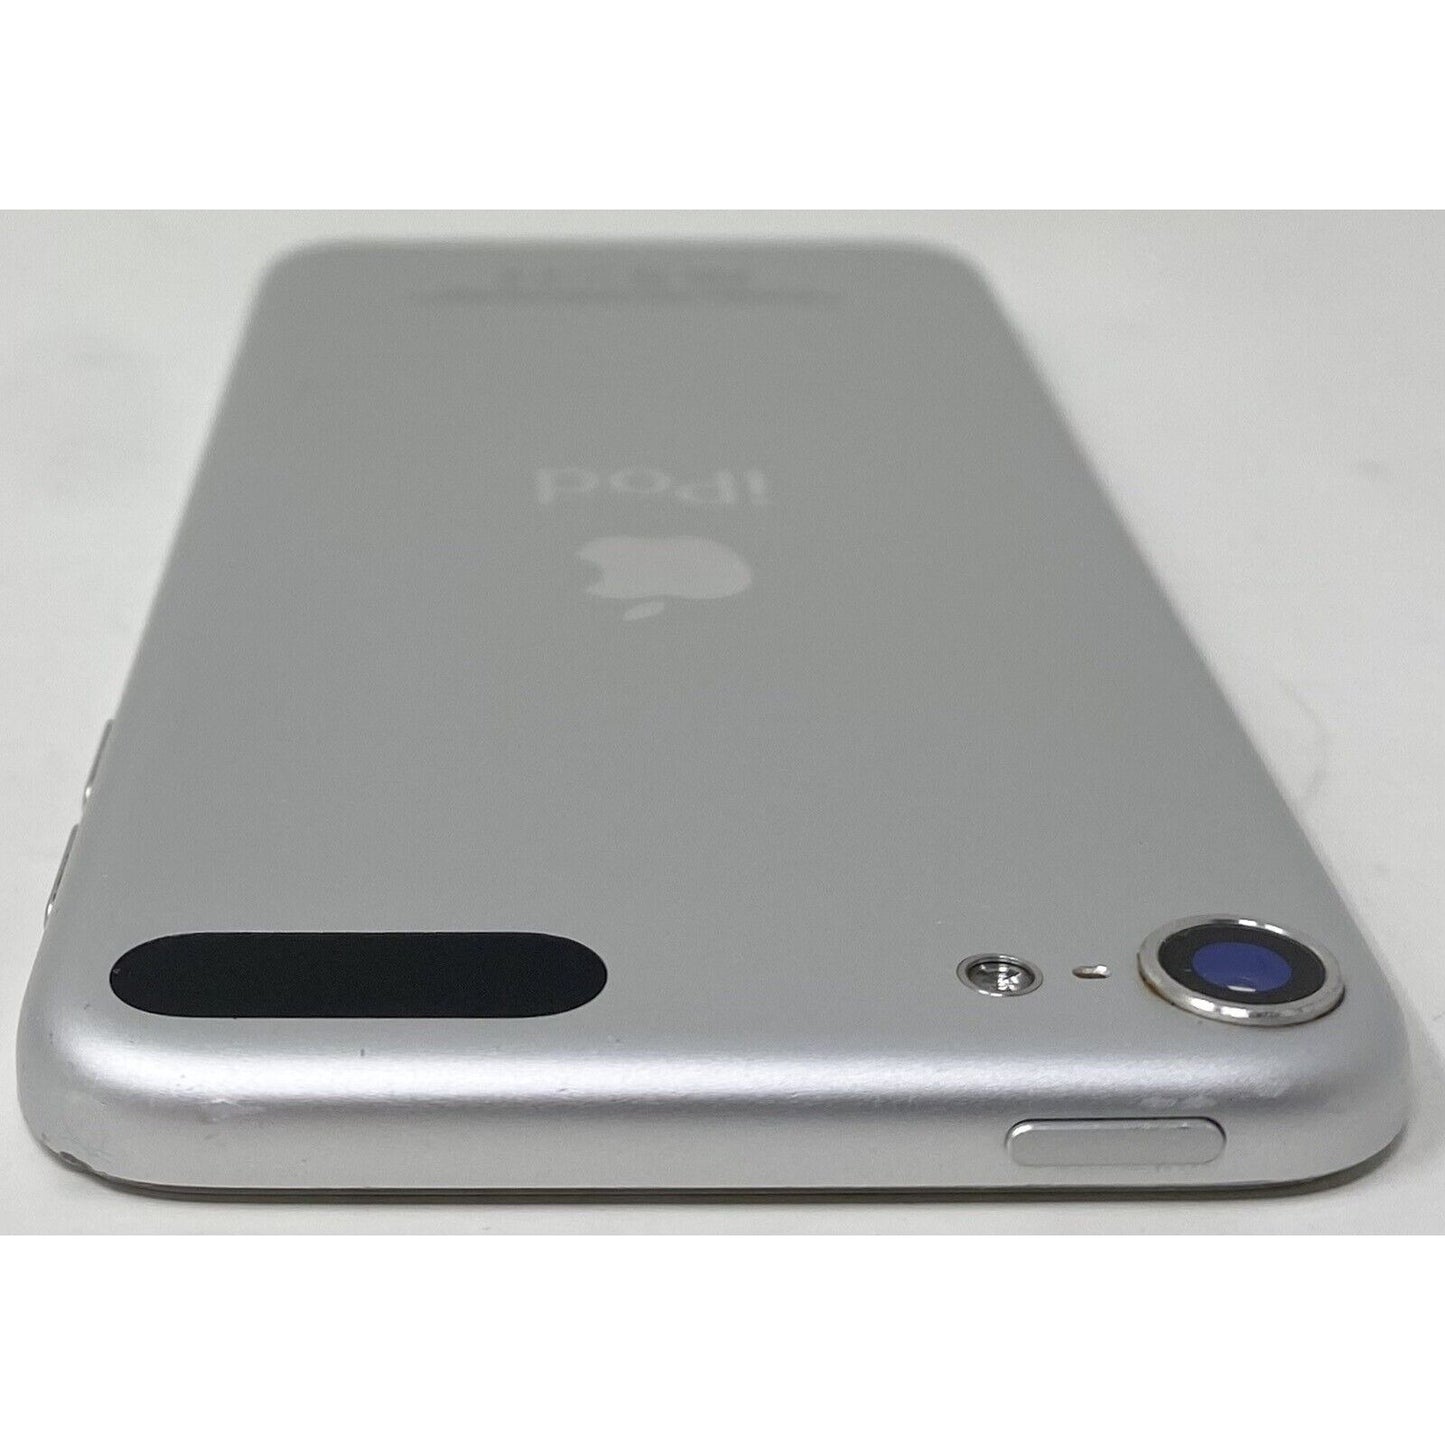 Apple MKHX2LL/A iPod Touch 6th Generation 32GB - Silver